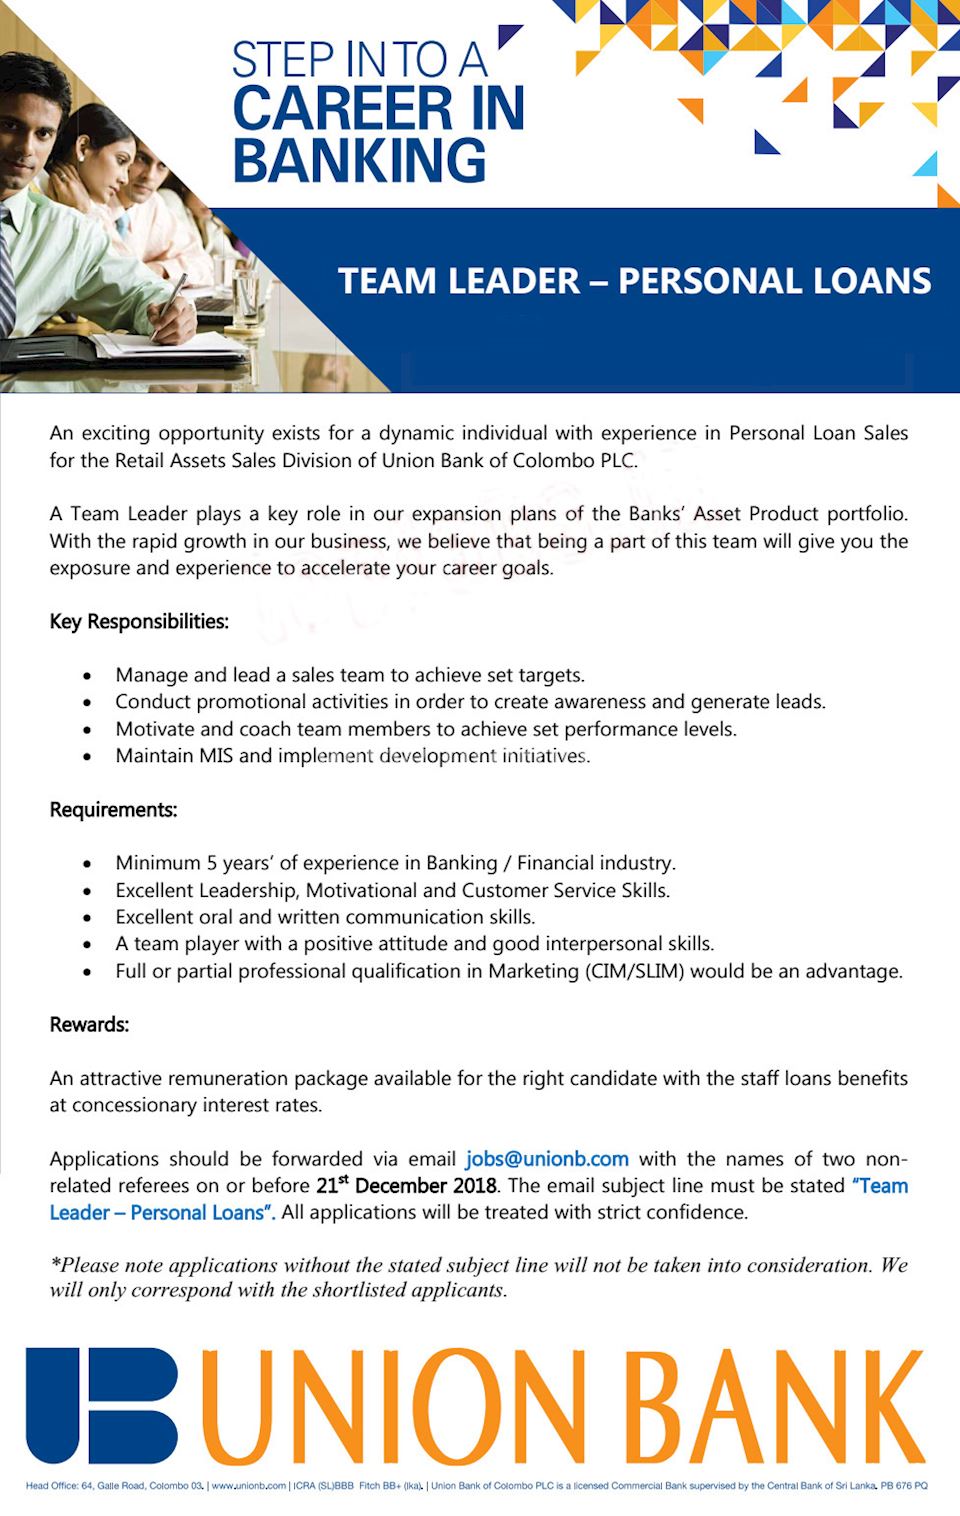 Team Leader - Personal Loans